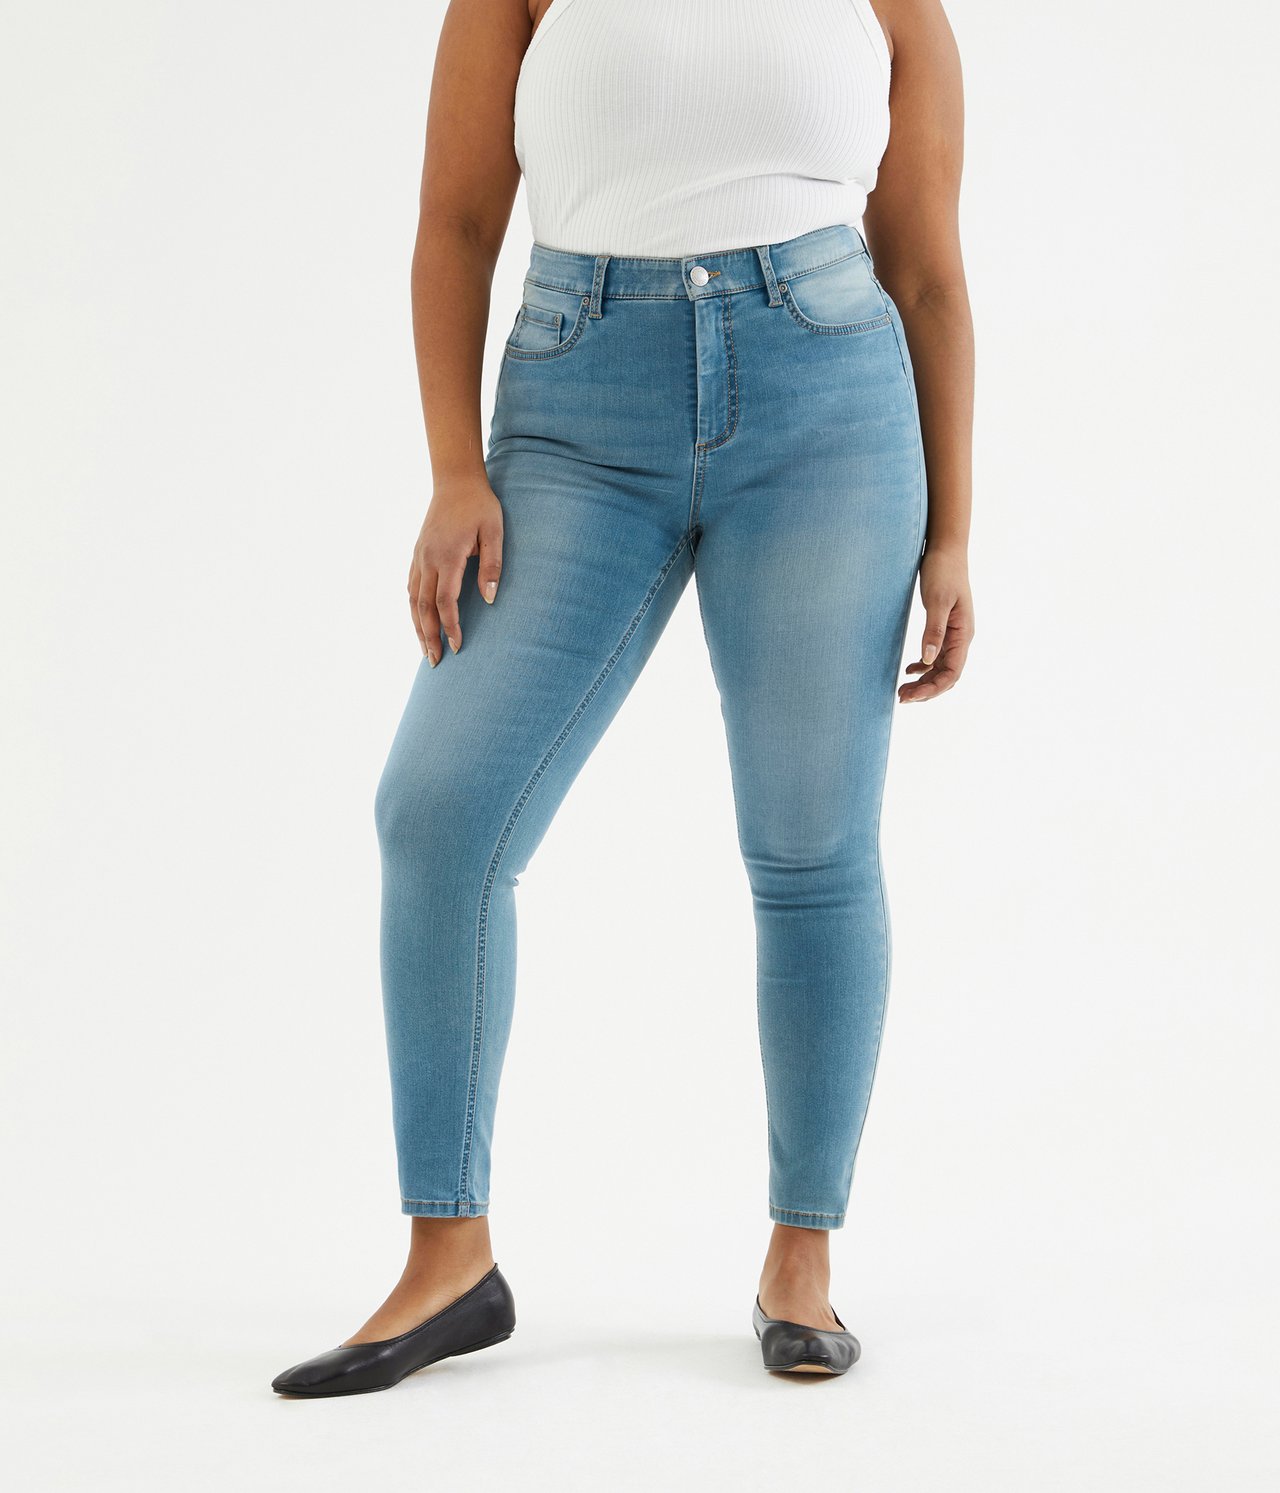 Super slim jeans short leg - Denim - 7